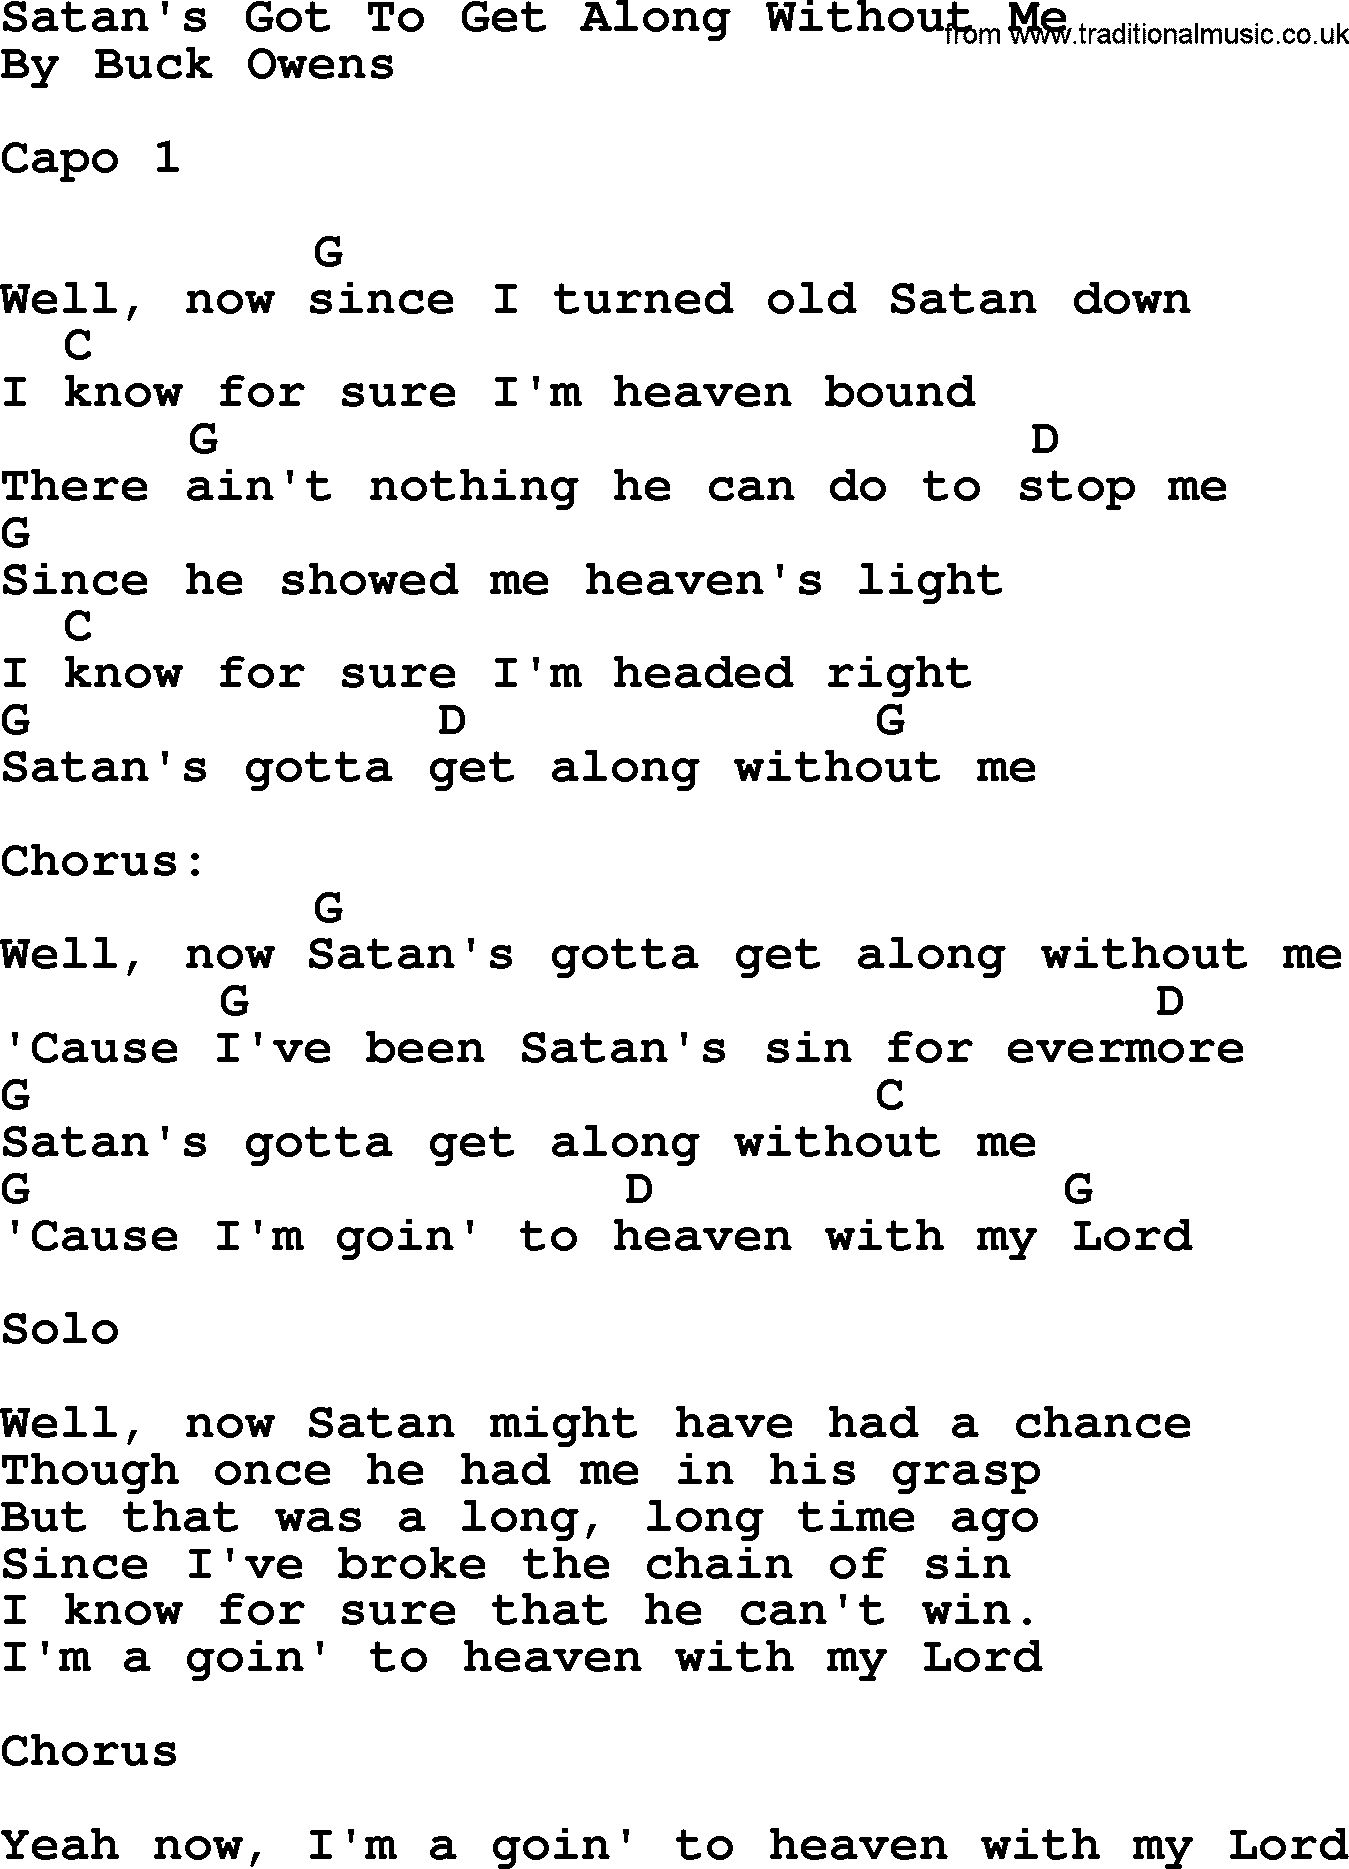 Bluegrass song: Satan's Got To Get Along Without Me, lyrics and chords